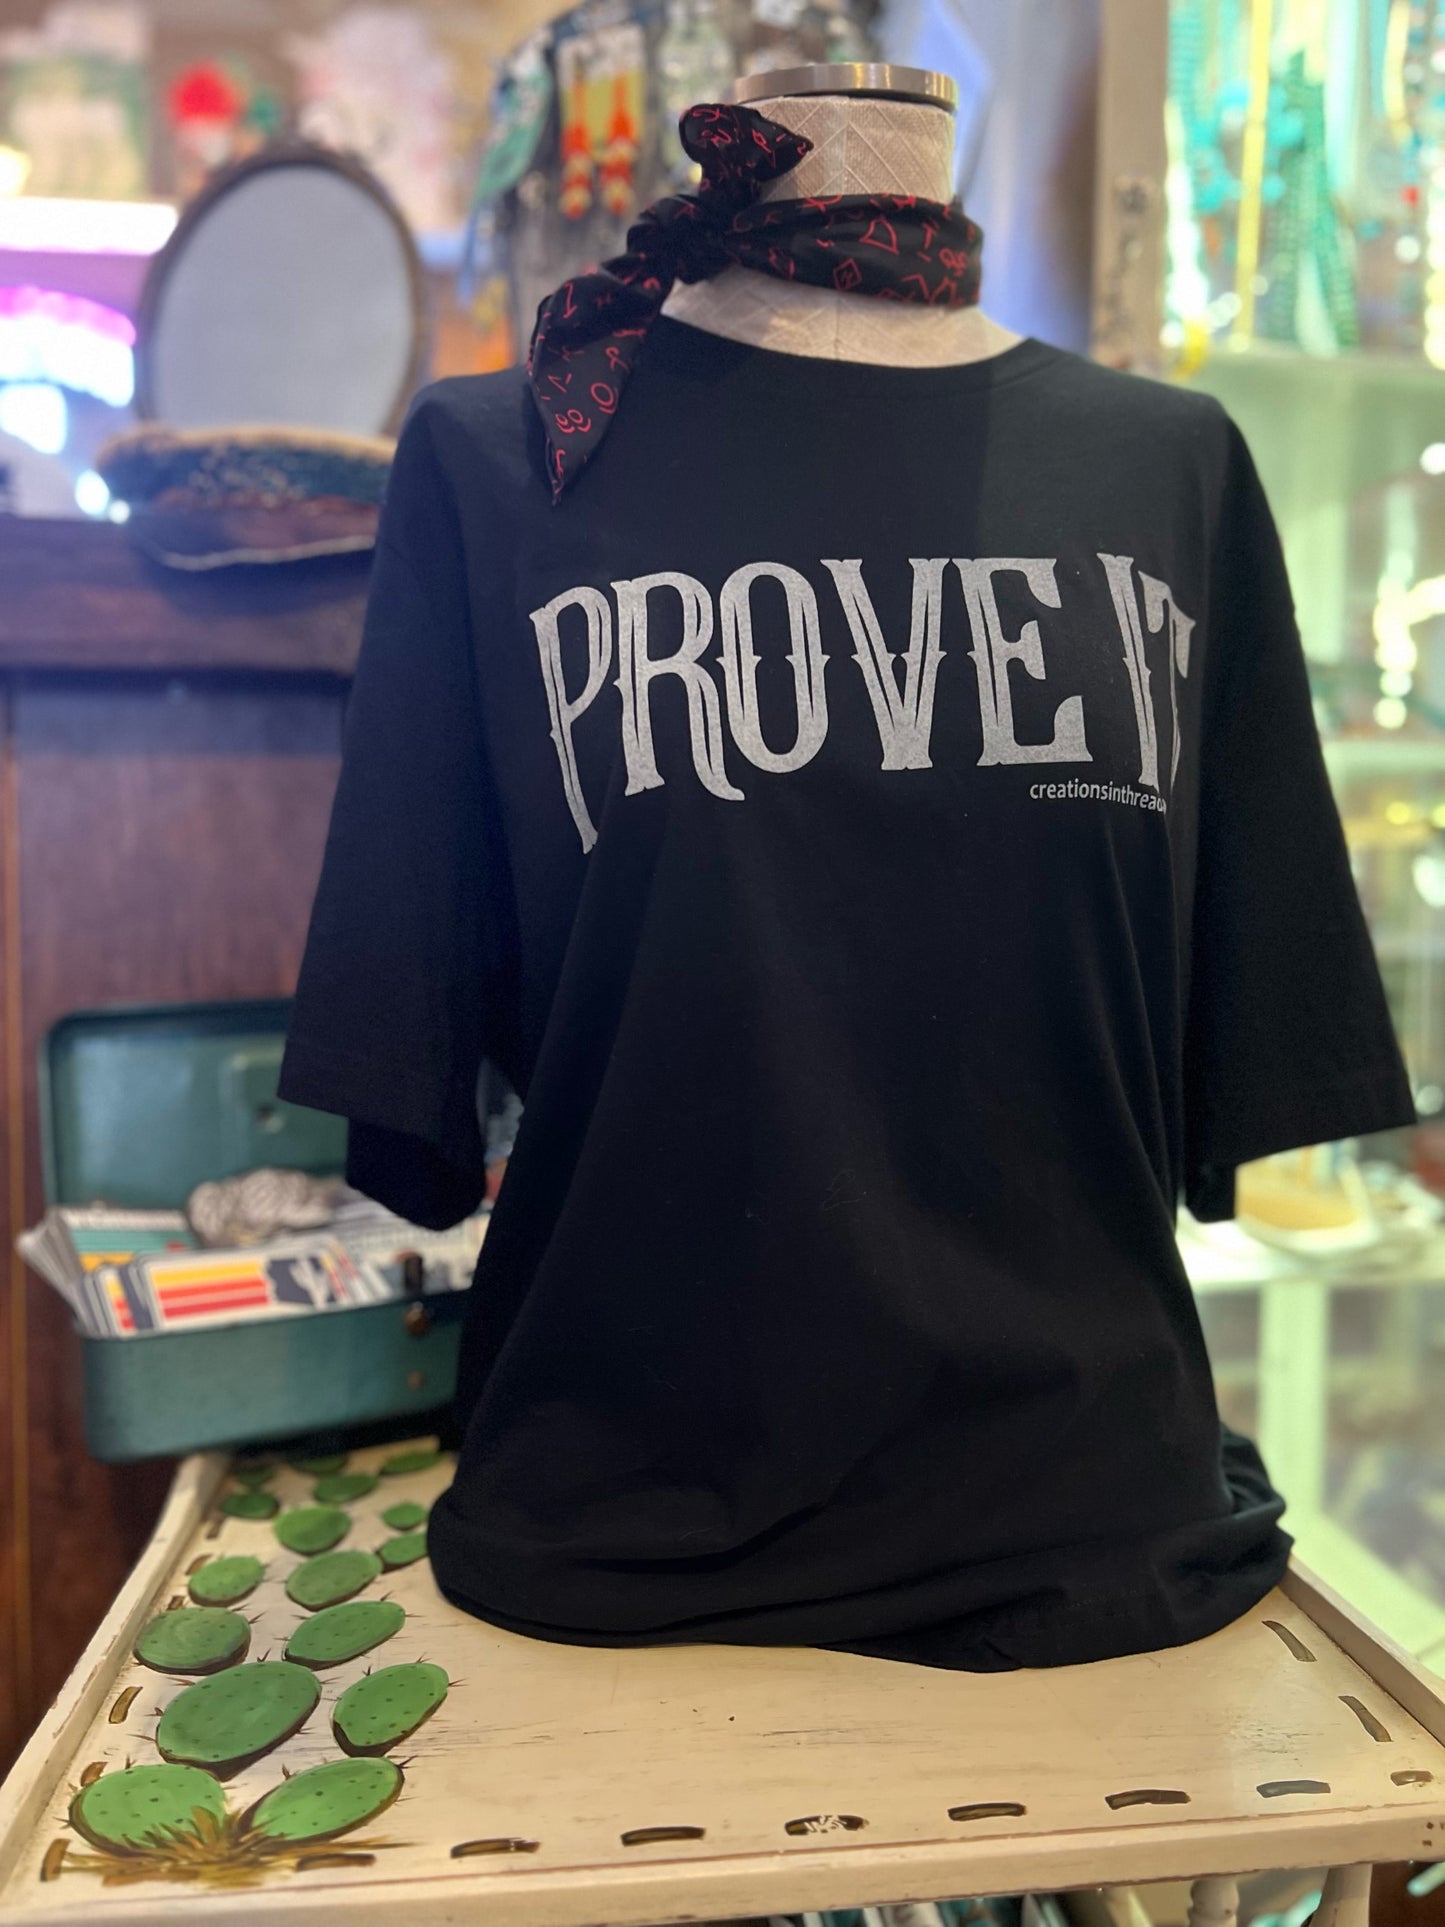 Prove It T-Shirt